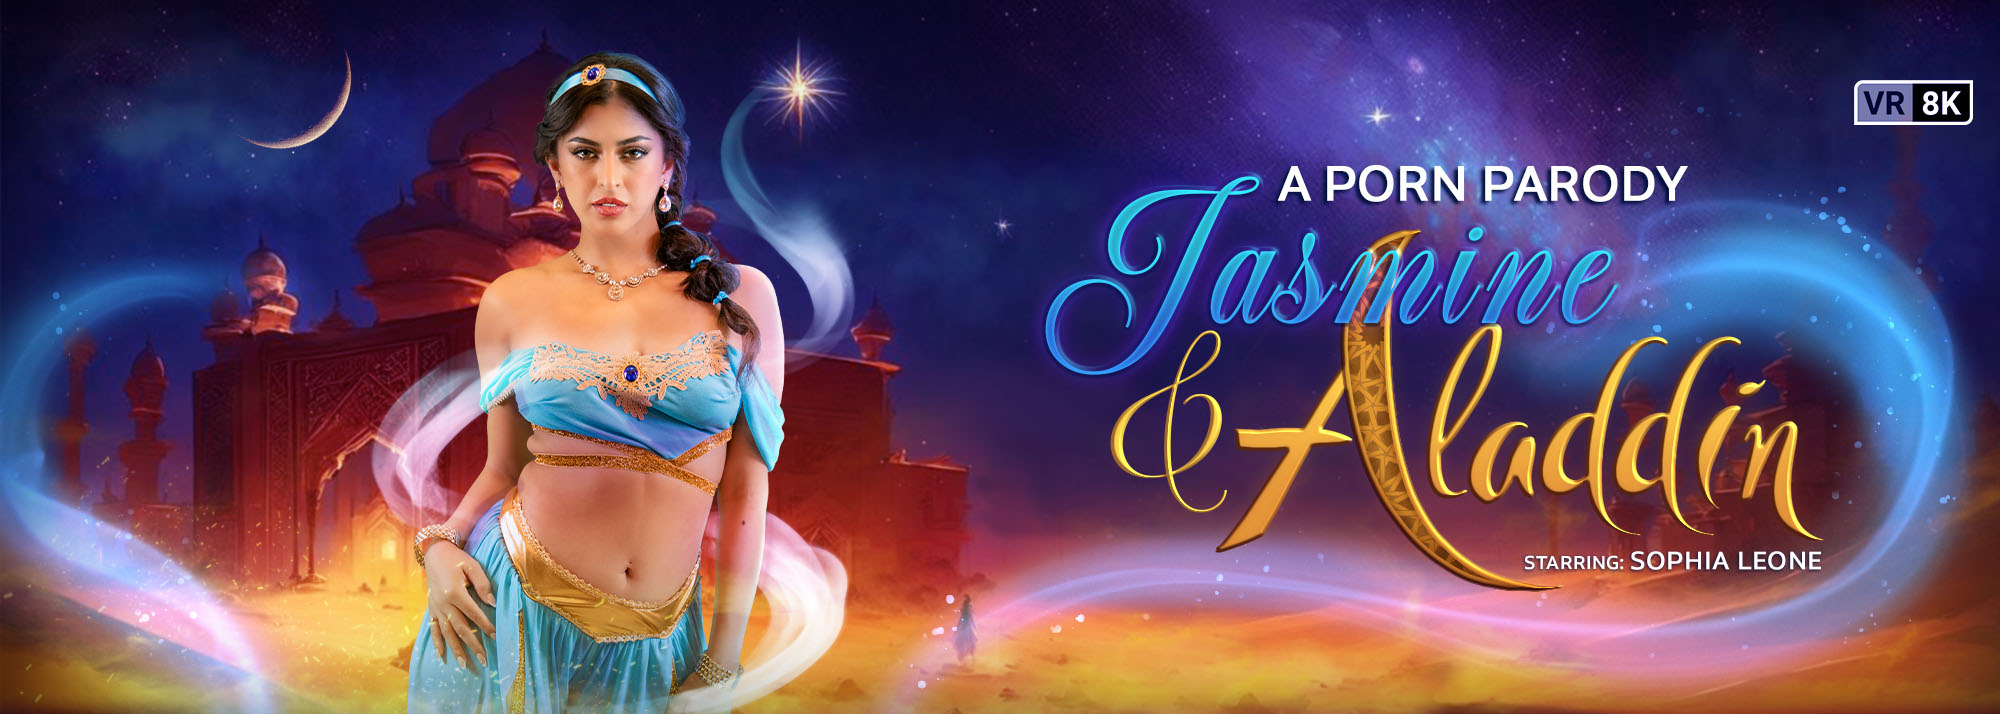 Cosplay-VR-Jasimin-Aladdin